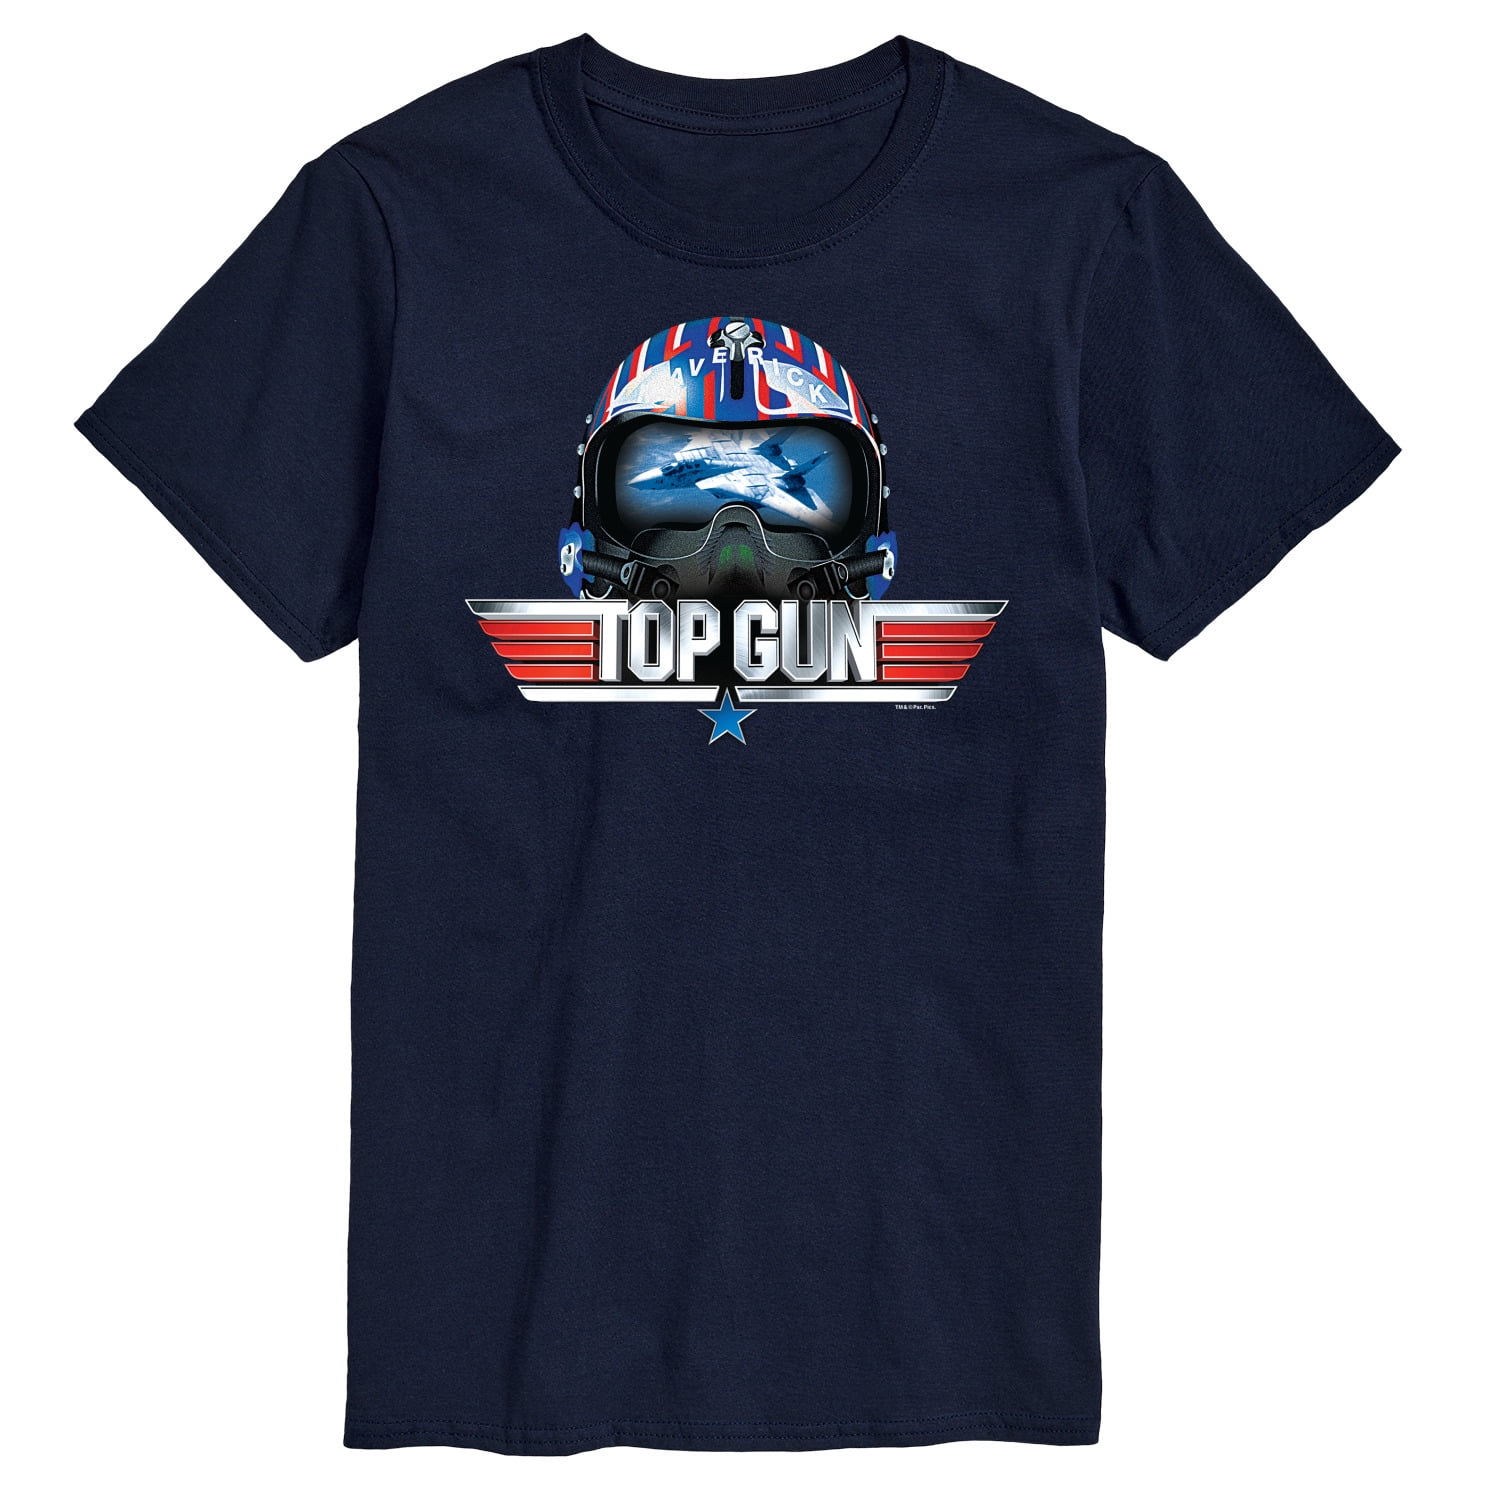 Top Gun - Maverick Helmet - Men's Short Sleeve Graphic T-Shirt